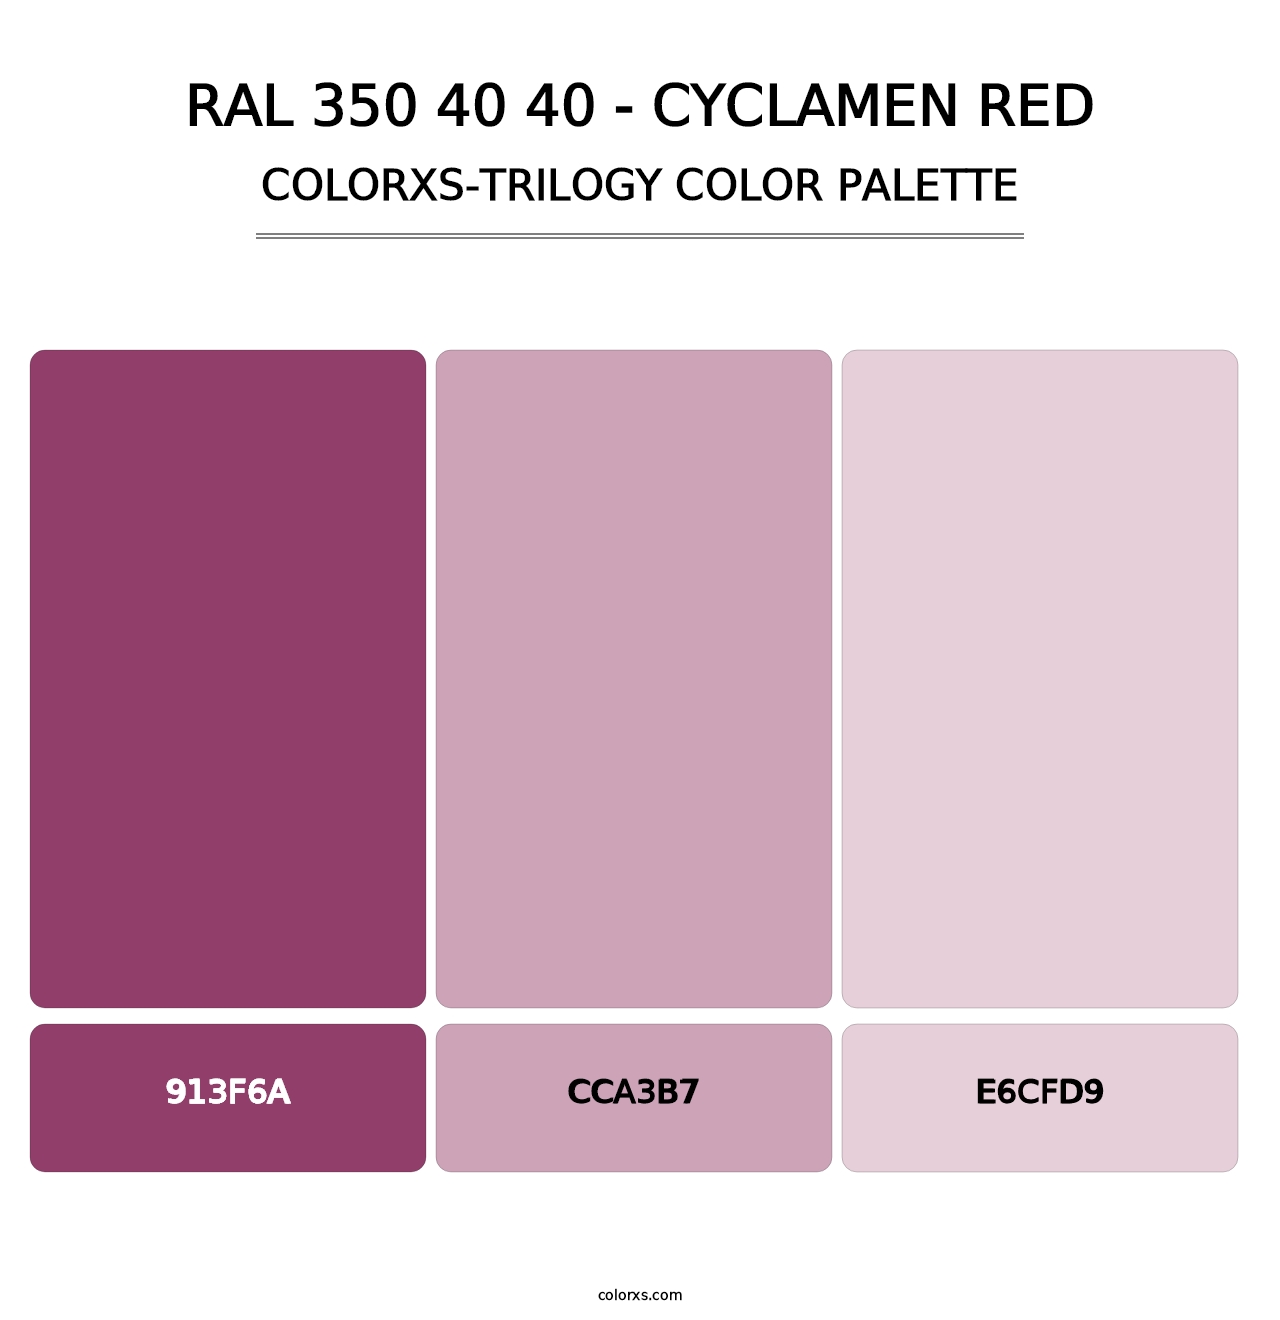 RAL 350 40 40 - Cyclamen Red - Colorxs Trilogy Palette